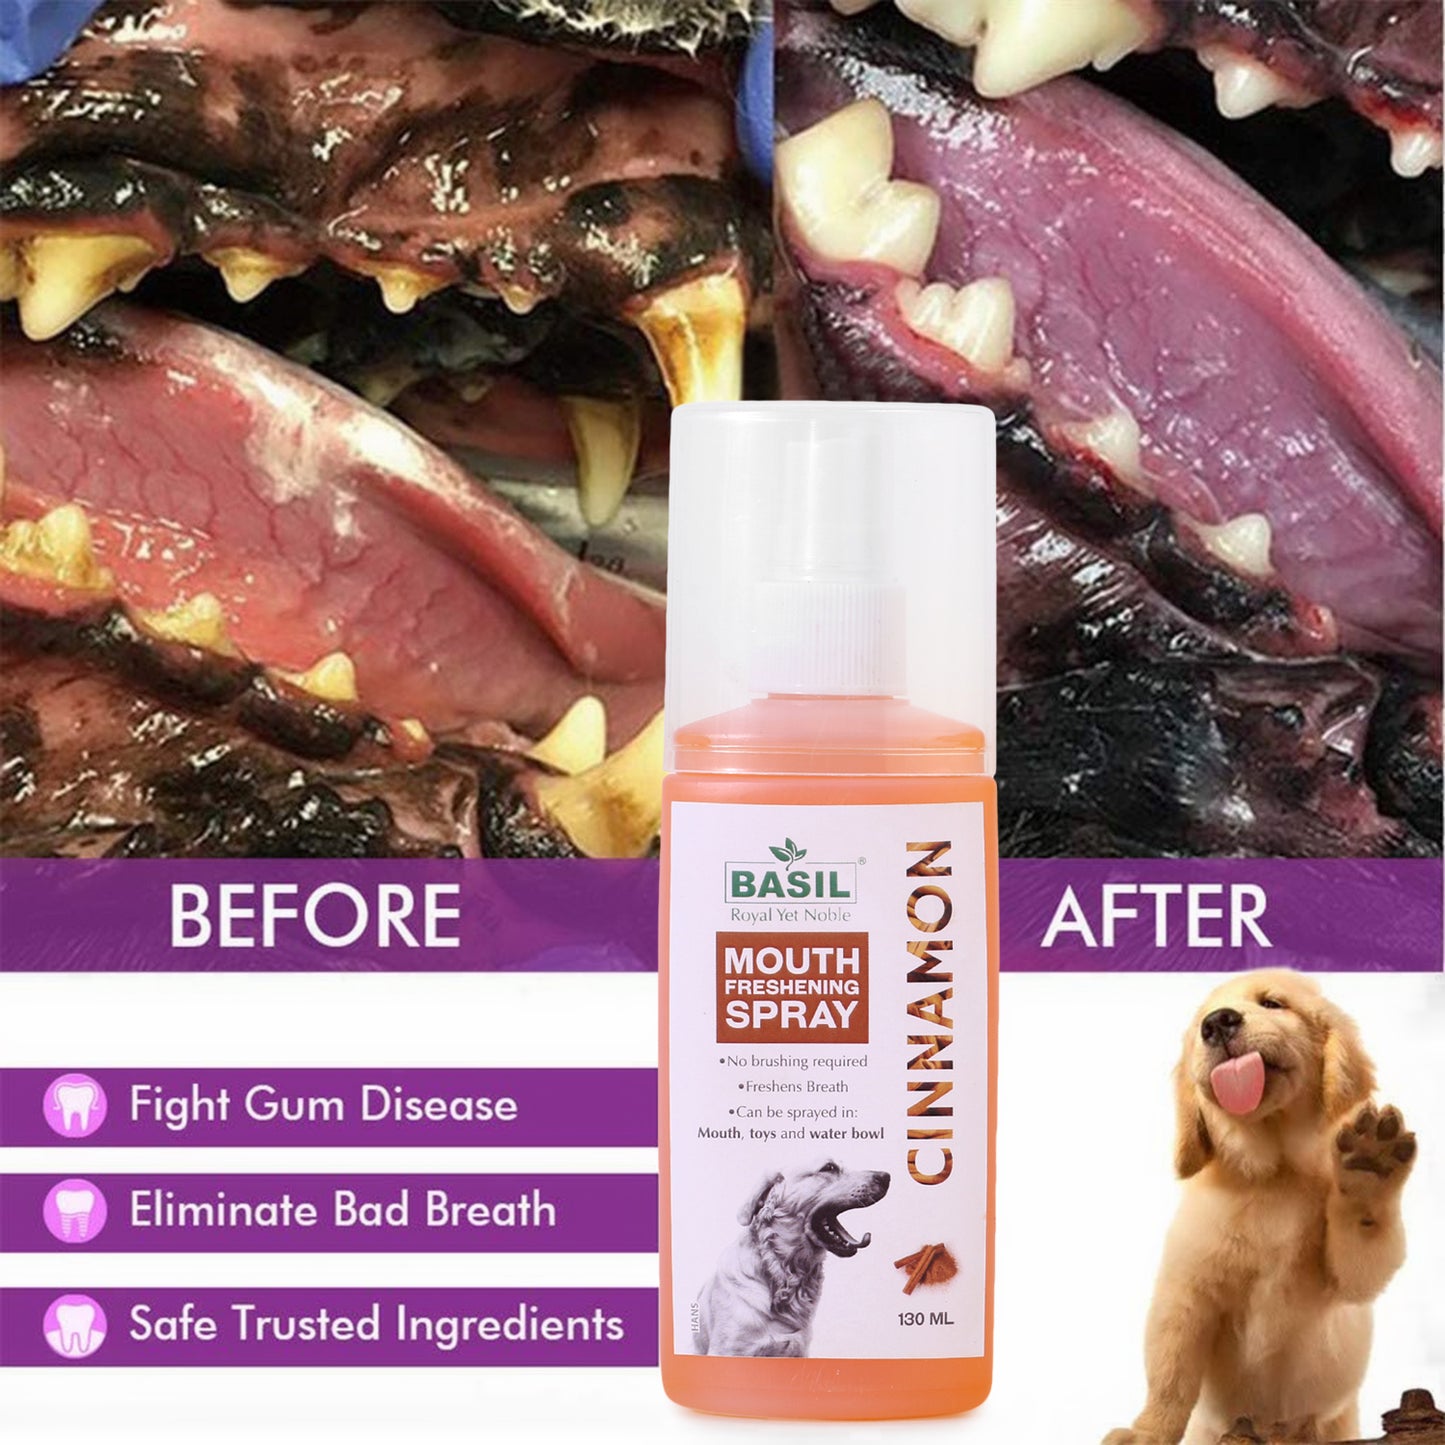 BASIL Cinnamon Mouth Freshening Spray for Dogs, 130ml